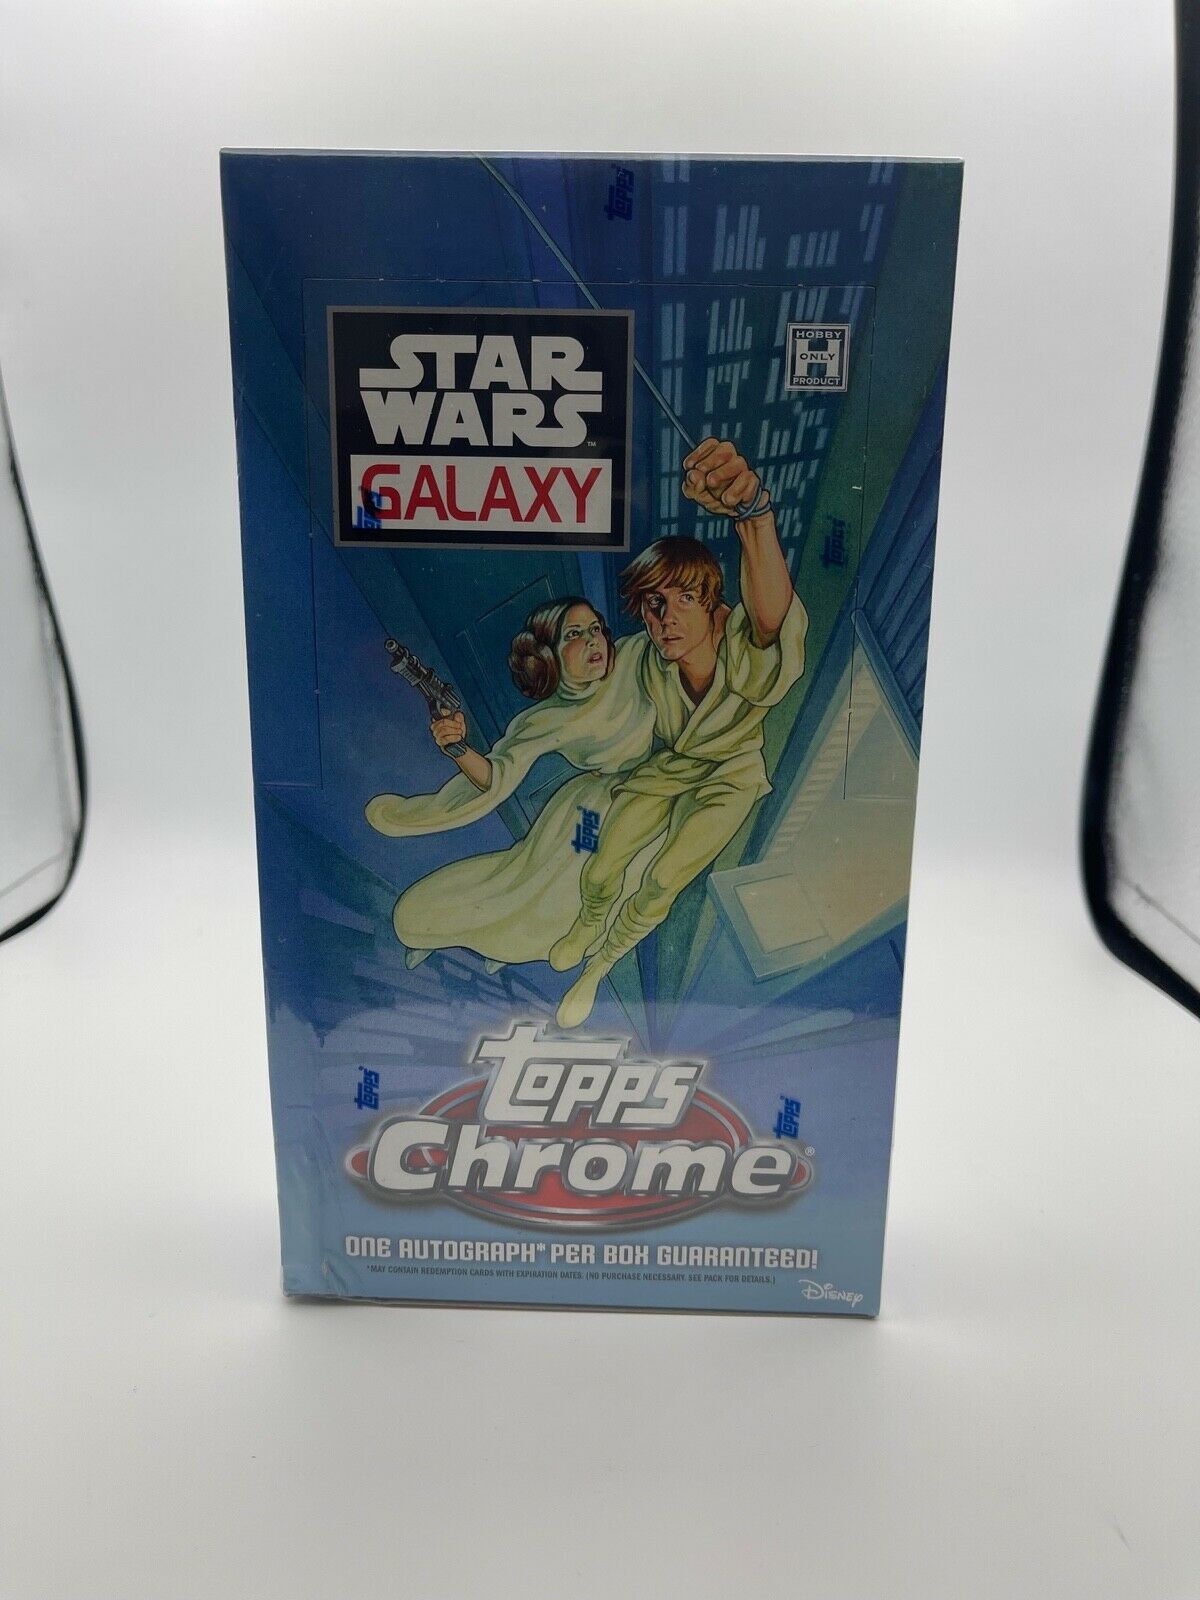 2021 Topps Chrome Star Wars Galaxy Hobby Box See Photos